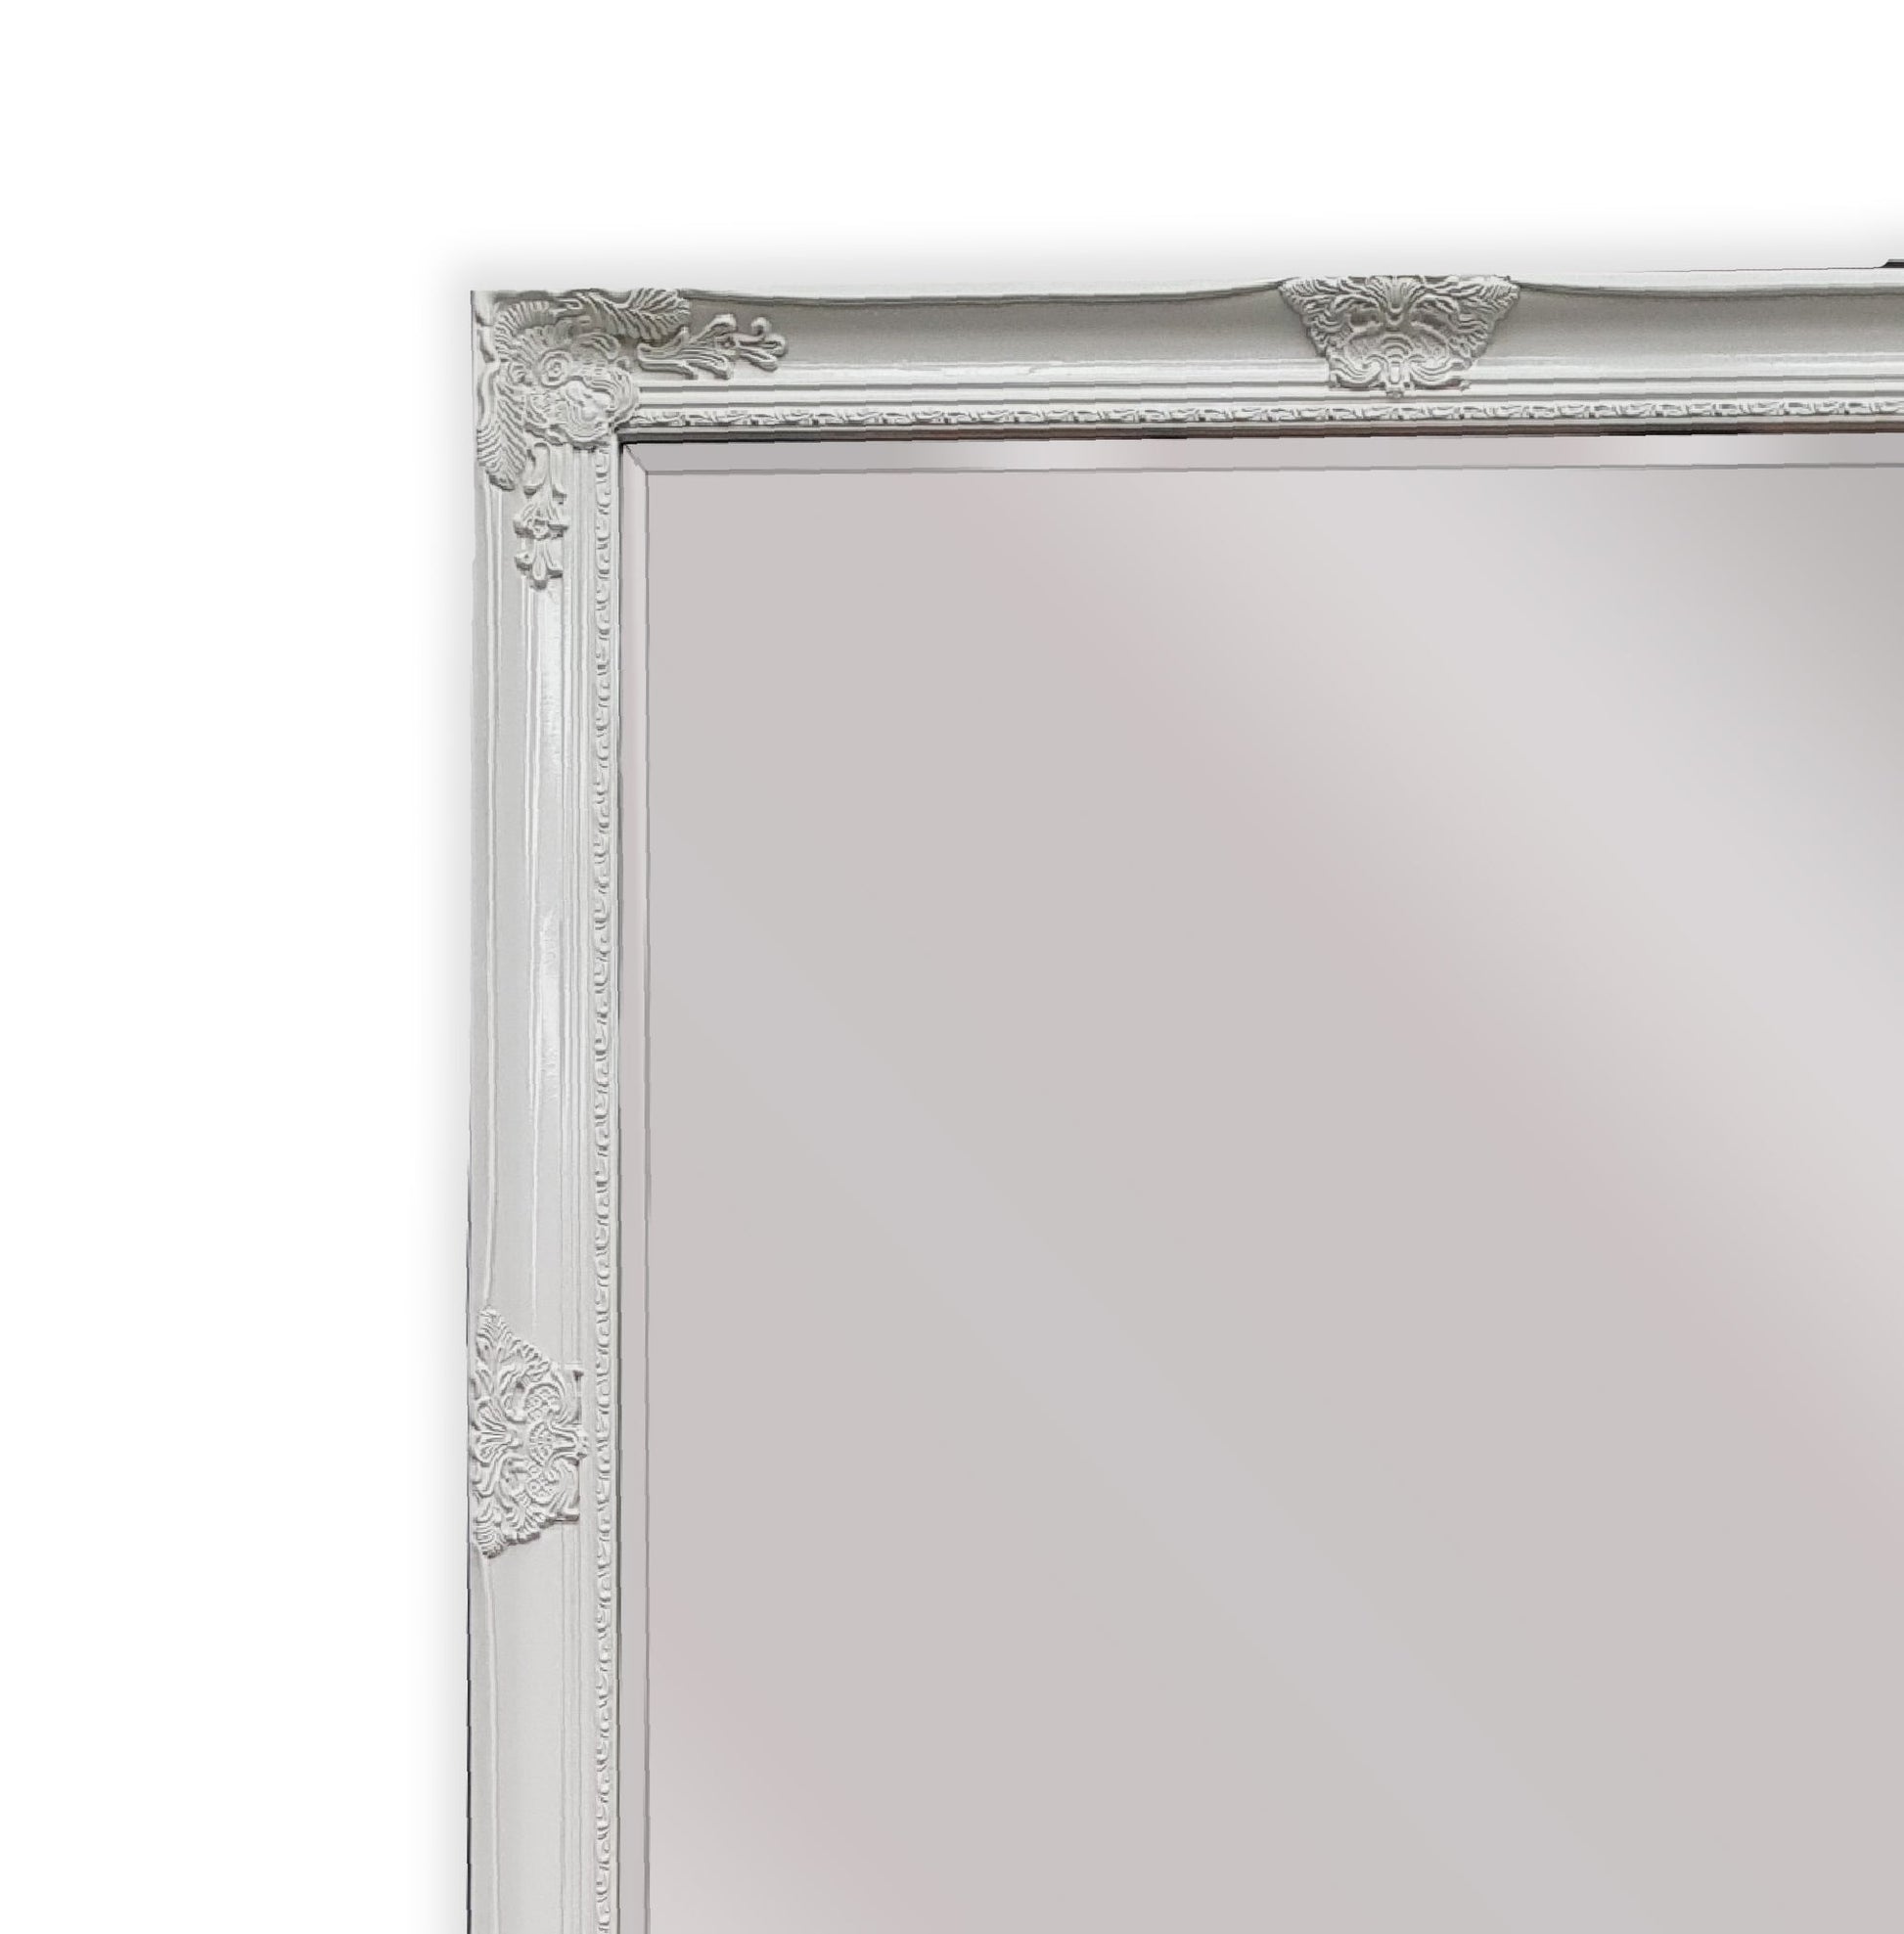 French Provincial Ornate Mirror - White - Medium 70cm x 170cm - image2